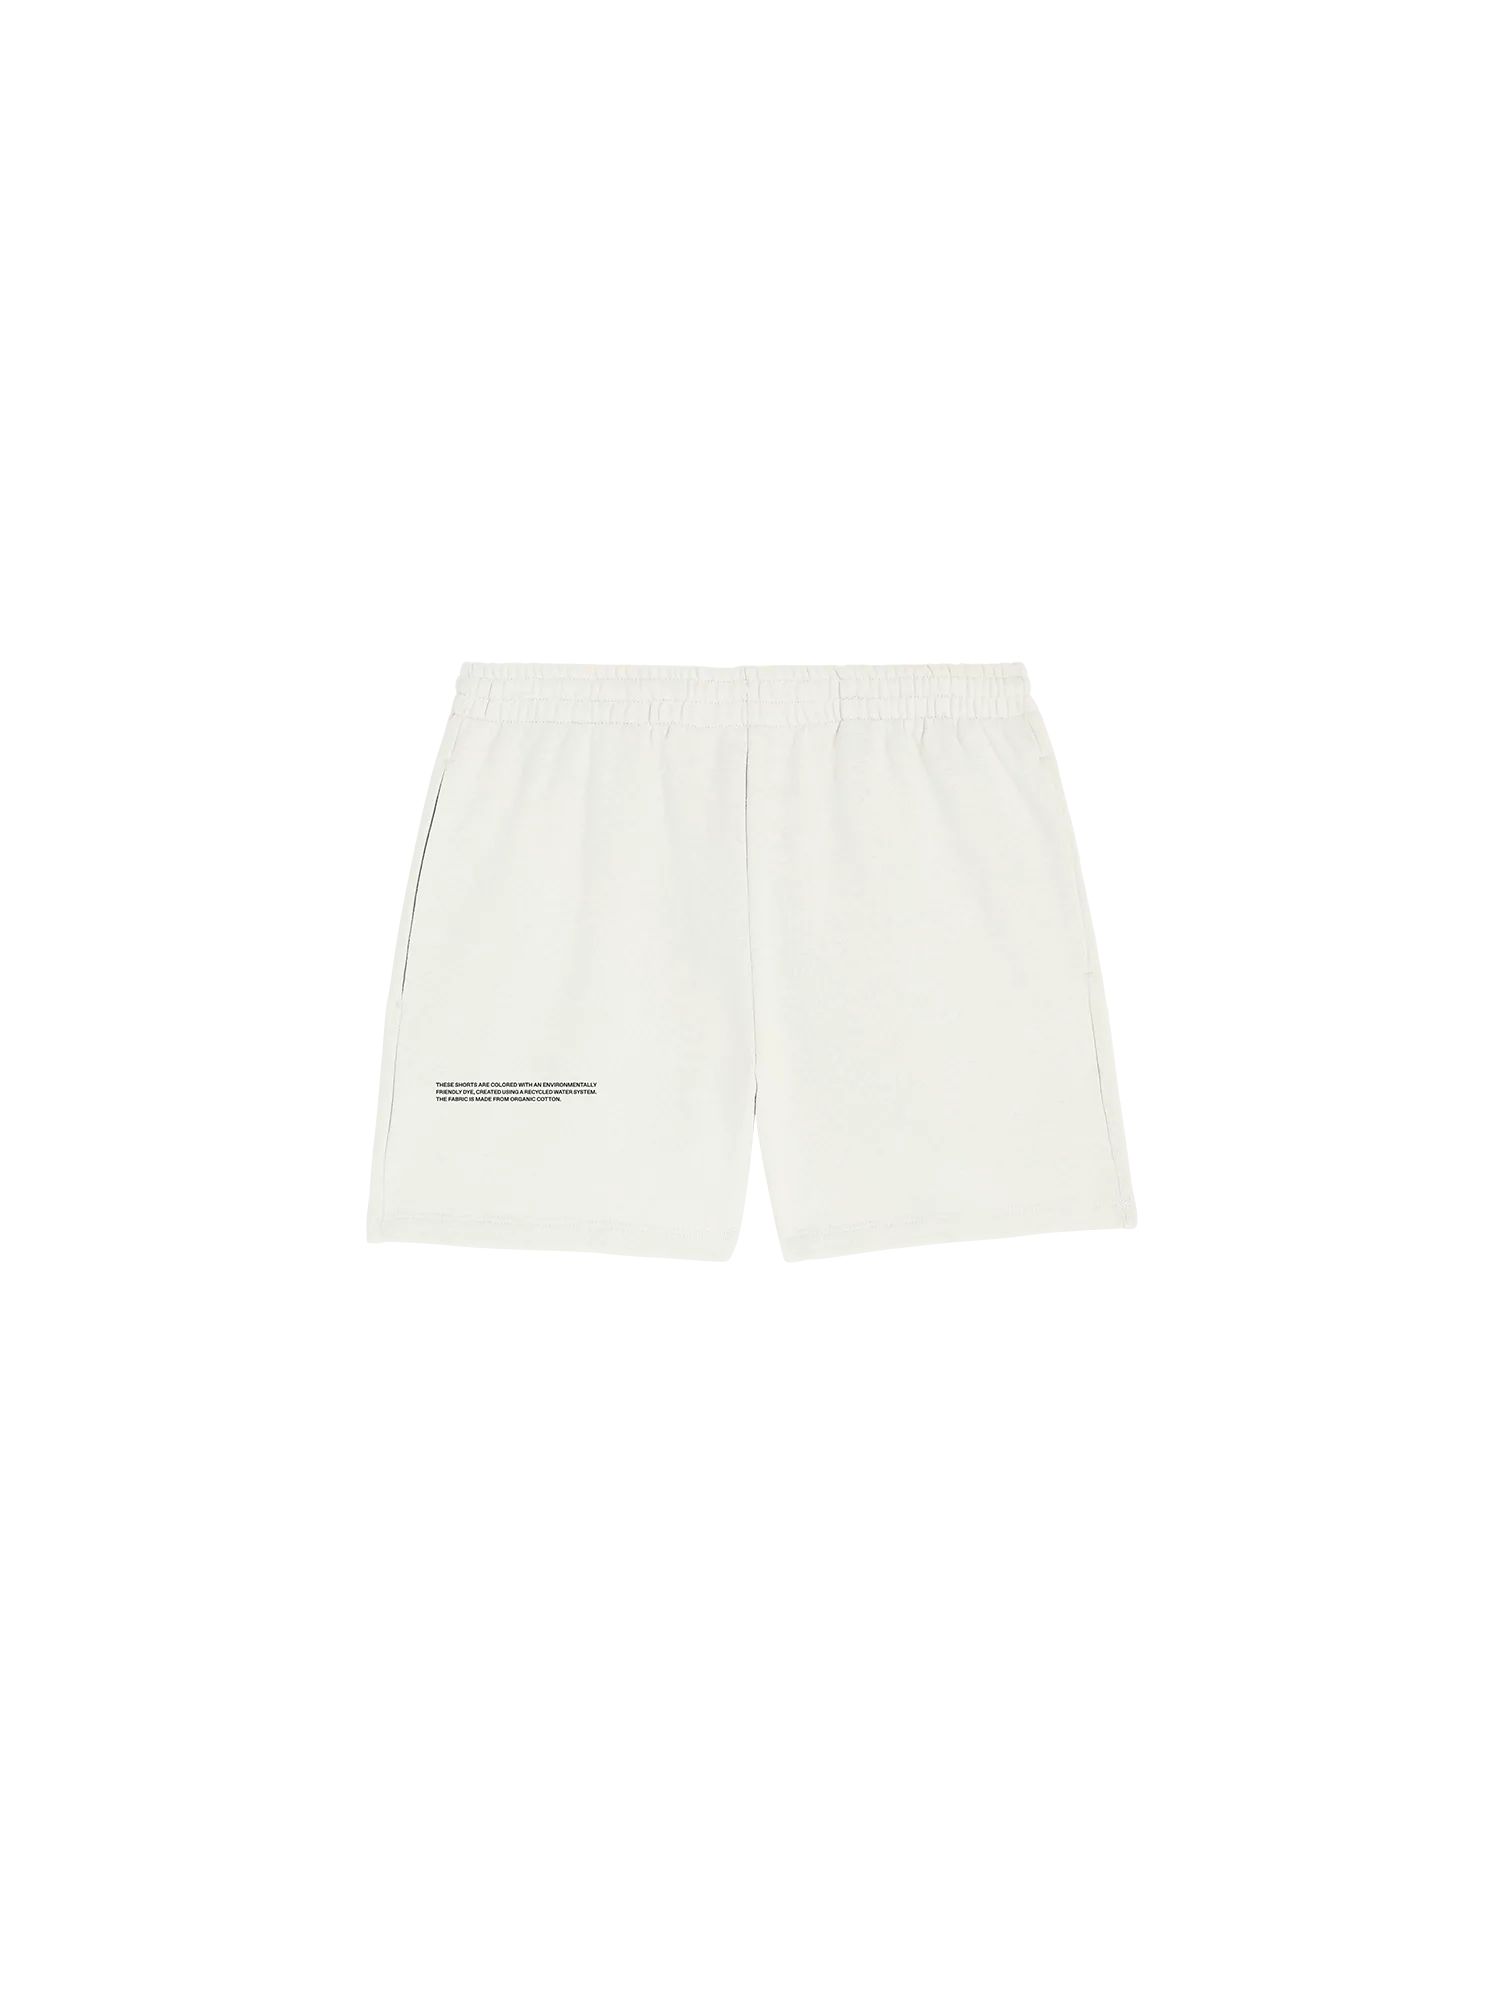 365 Shorts - Neutral Tones - Off-white - Pangaia | The Pangaia (EU, UK, AUS)